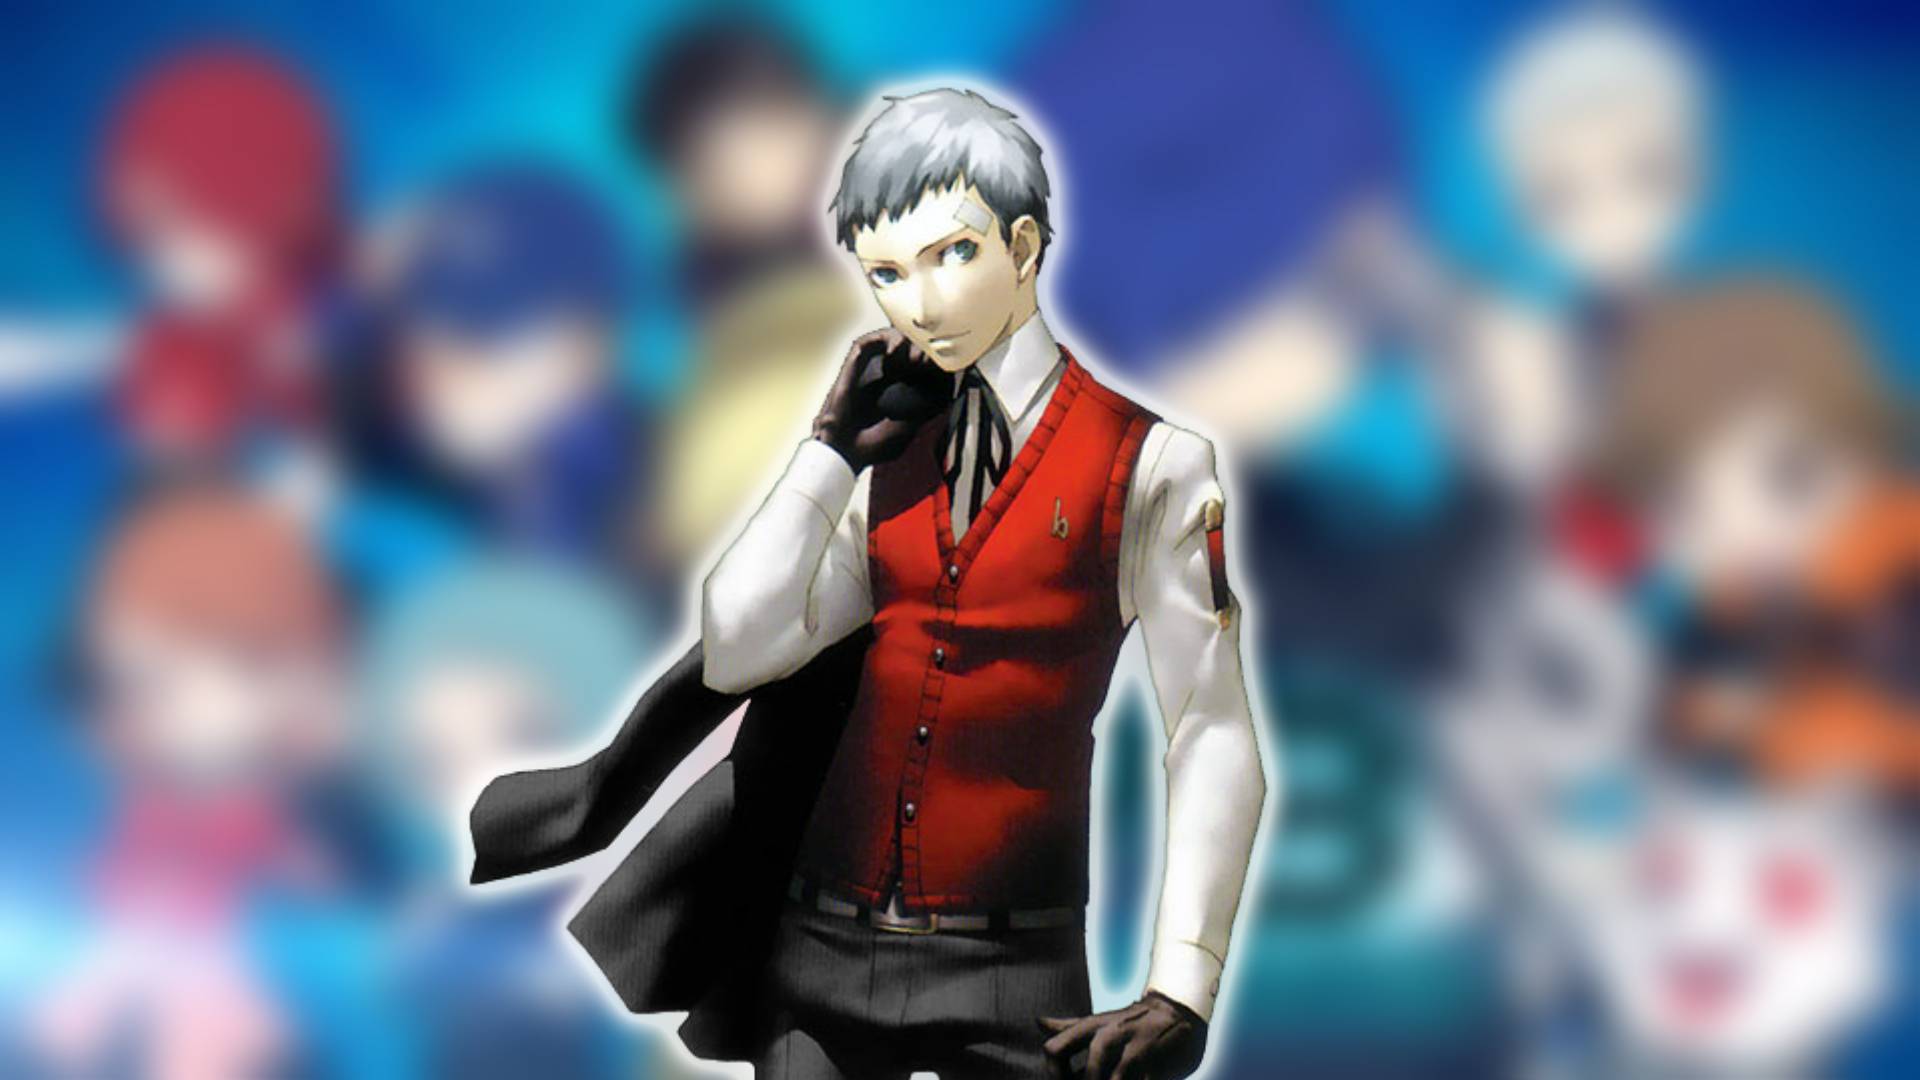 Persona 3 characters: Akihiko Sanada from Persona 3 Portable are visible